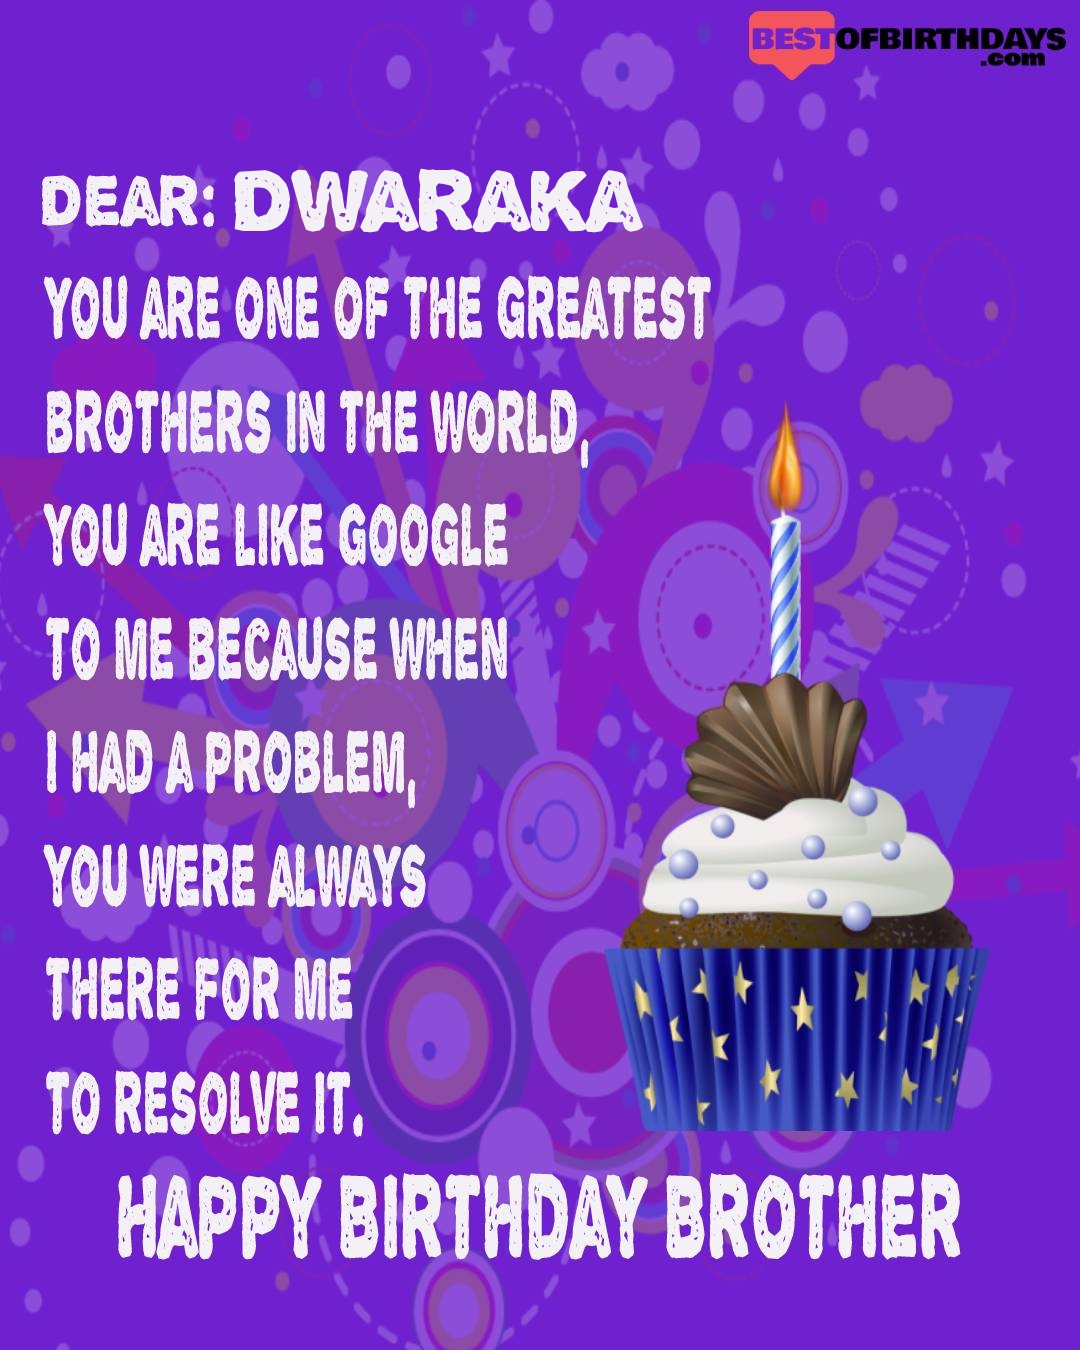 Happy birthday dwaraka bhai brother bro